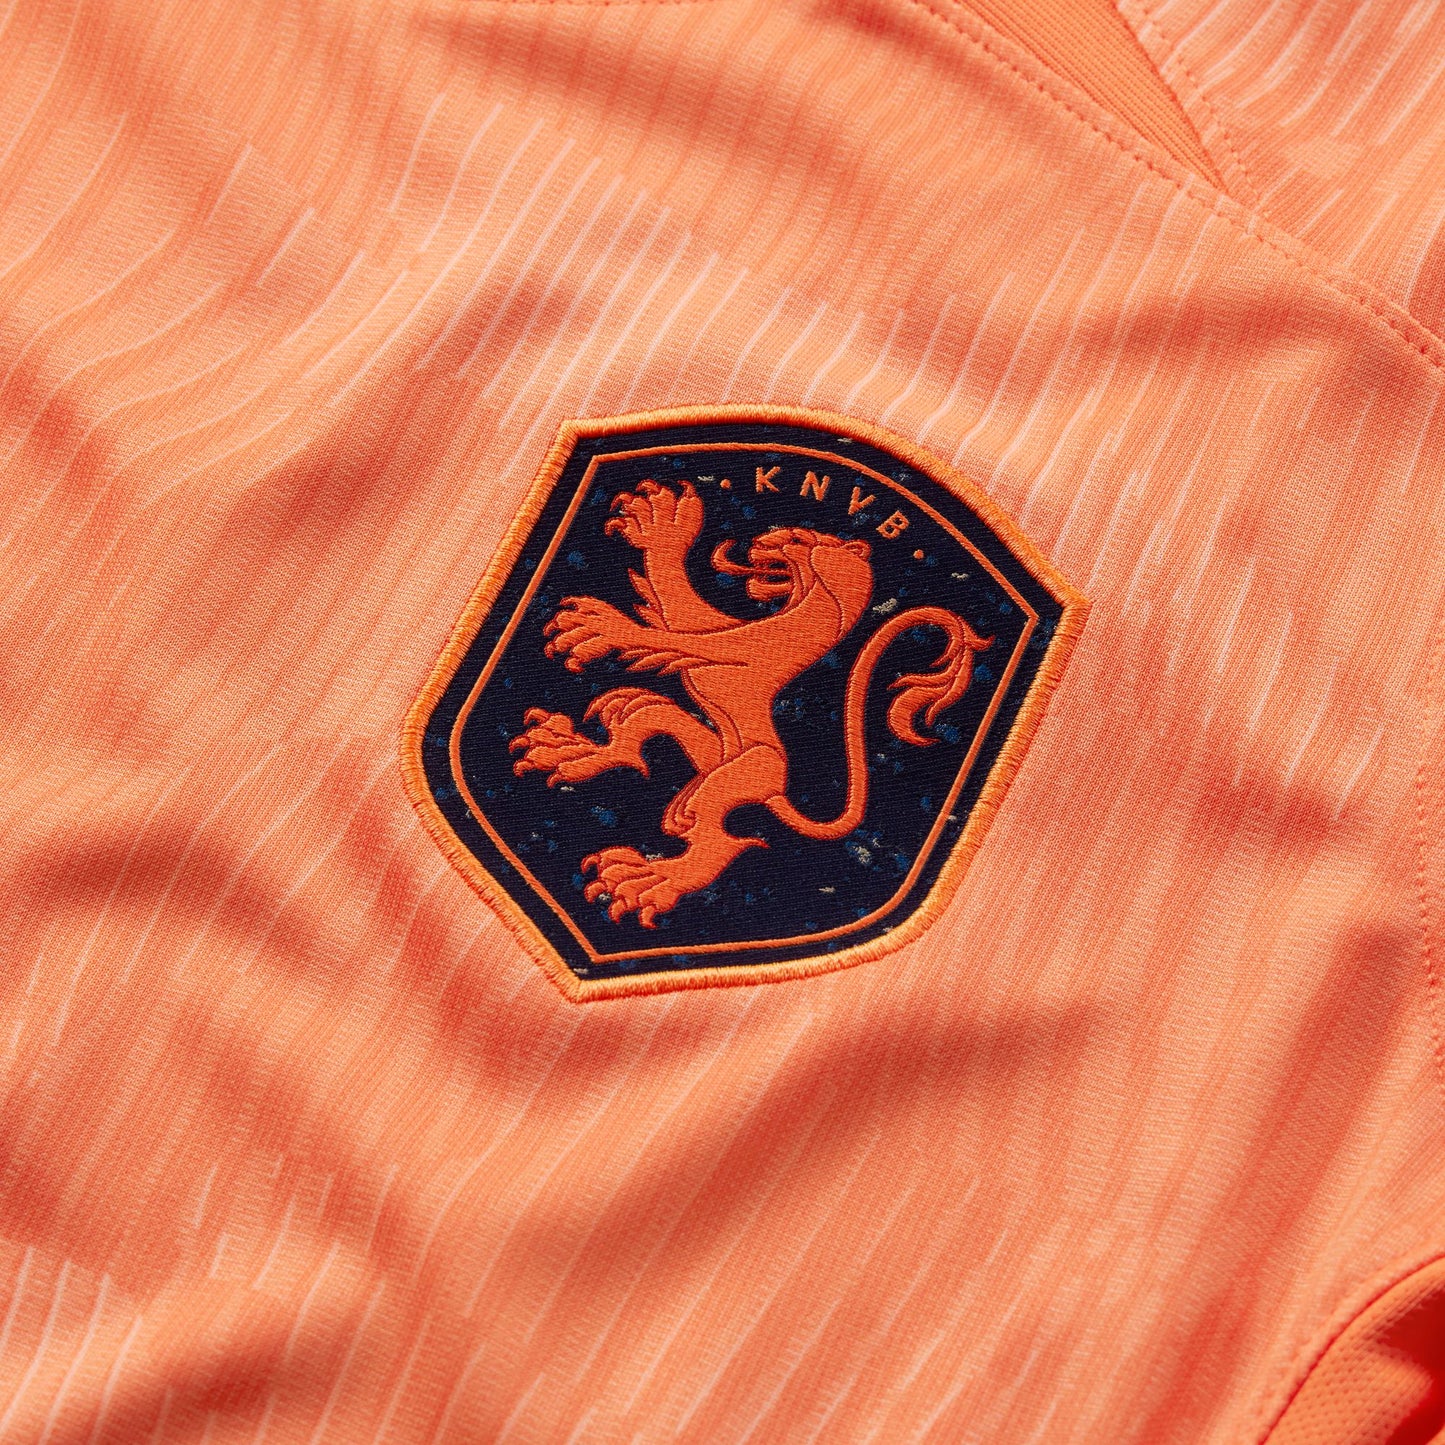 Women's Netherlands 2023 Stadium Home Jersey